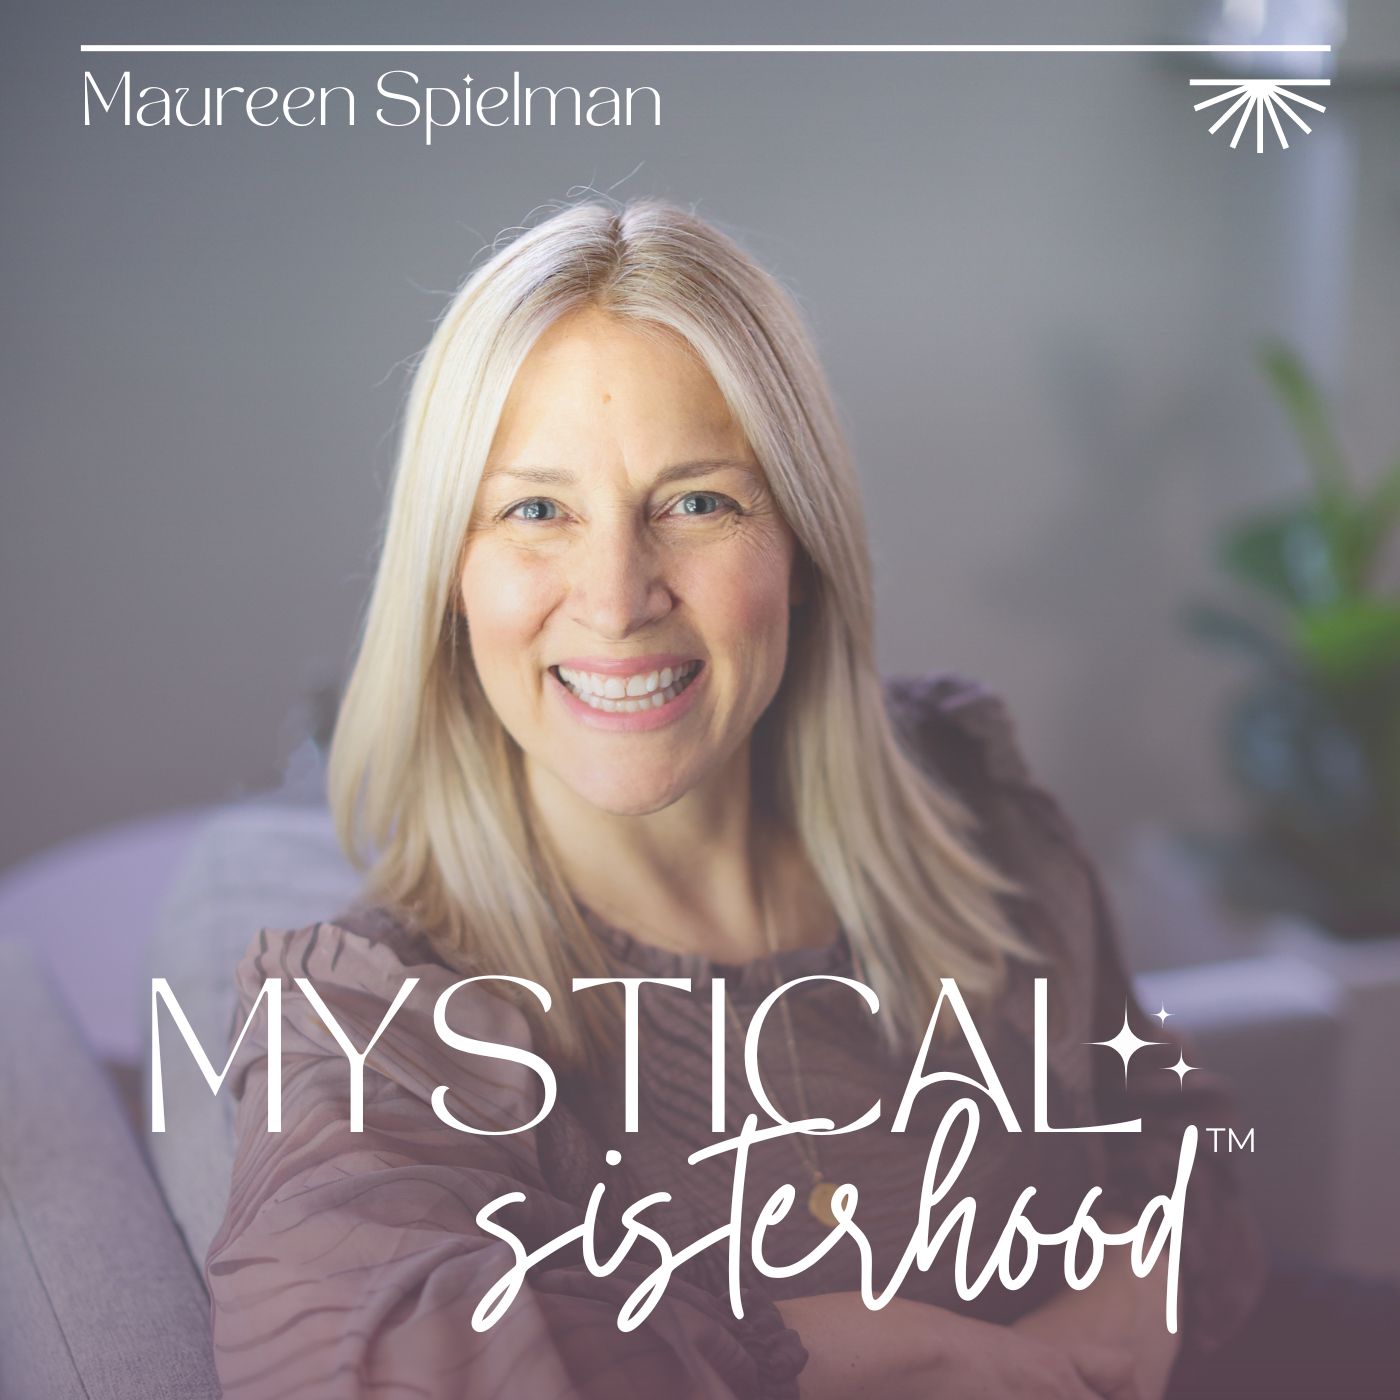 Welcome to the Mystical Sisterhood